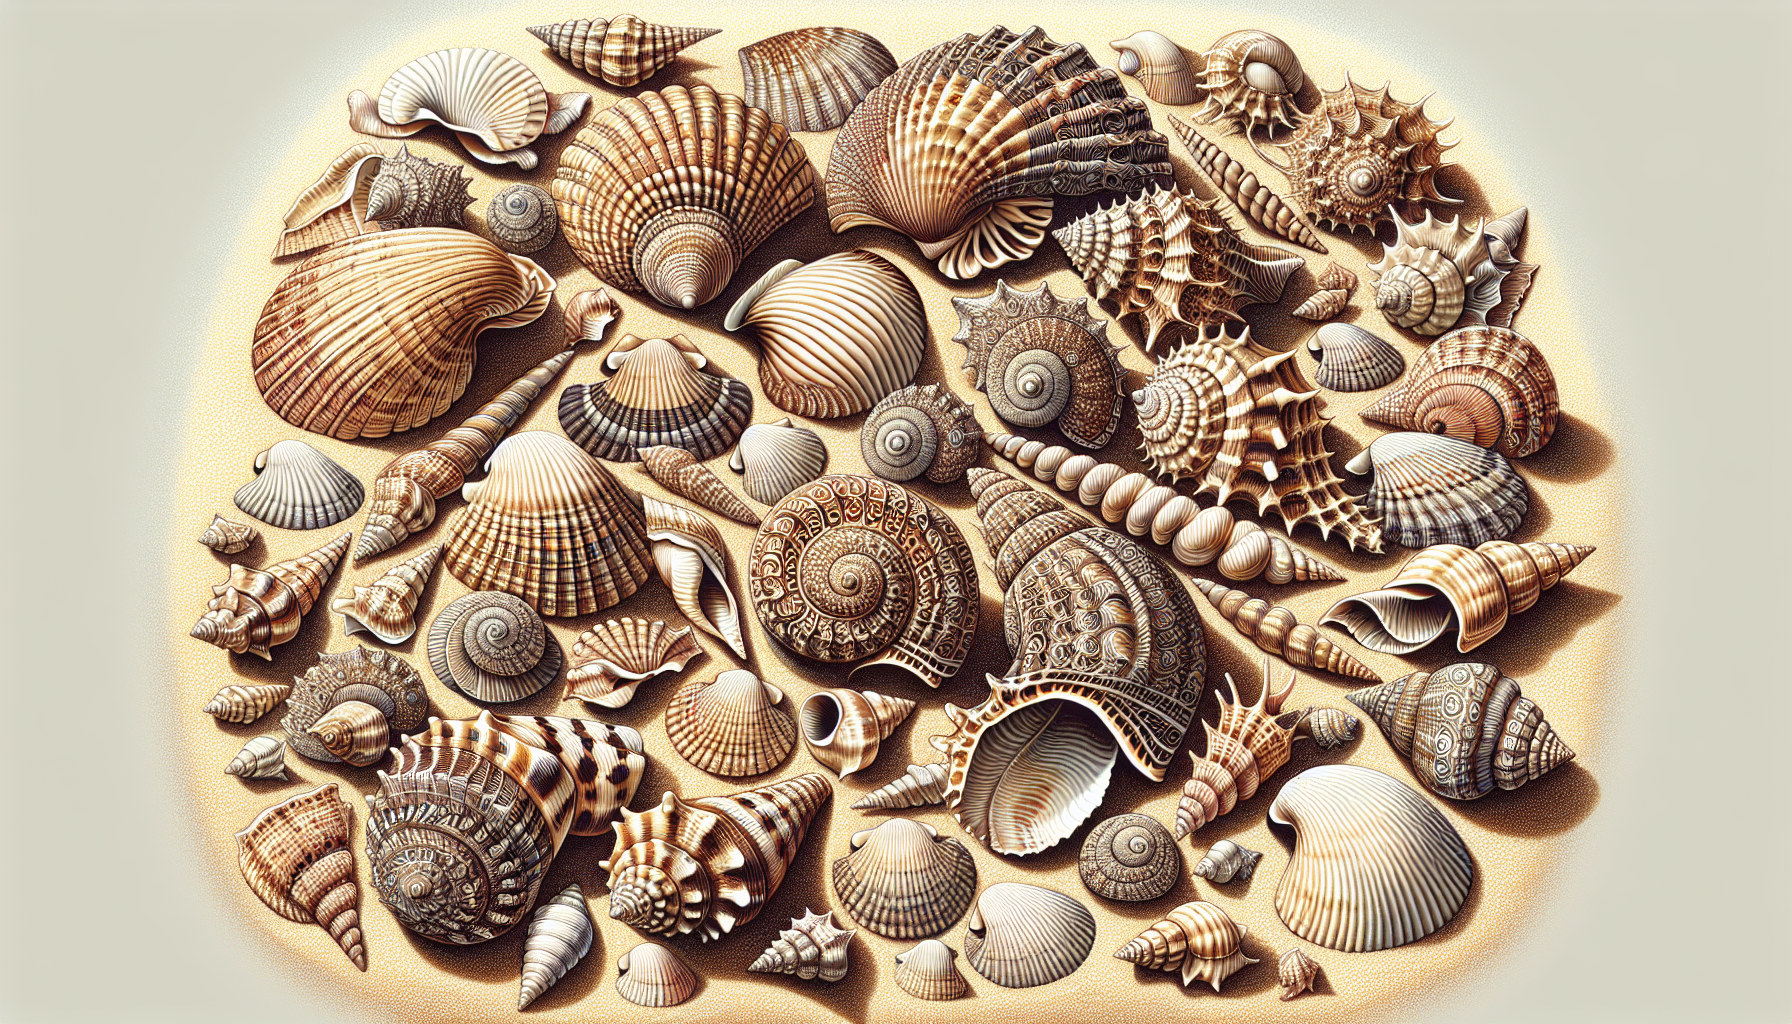 Large Seashells Wholesale | Illustration of a variety of large seashells on a sandy beach